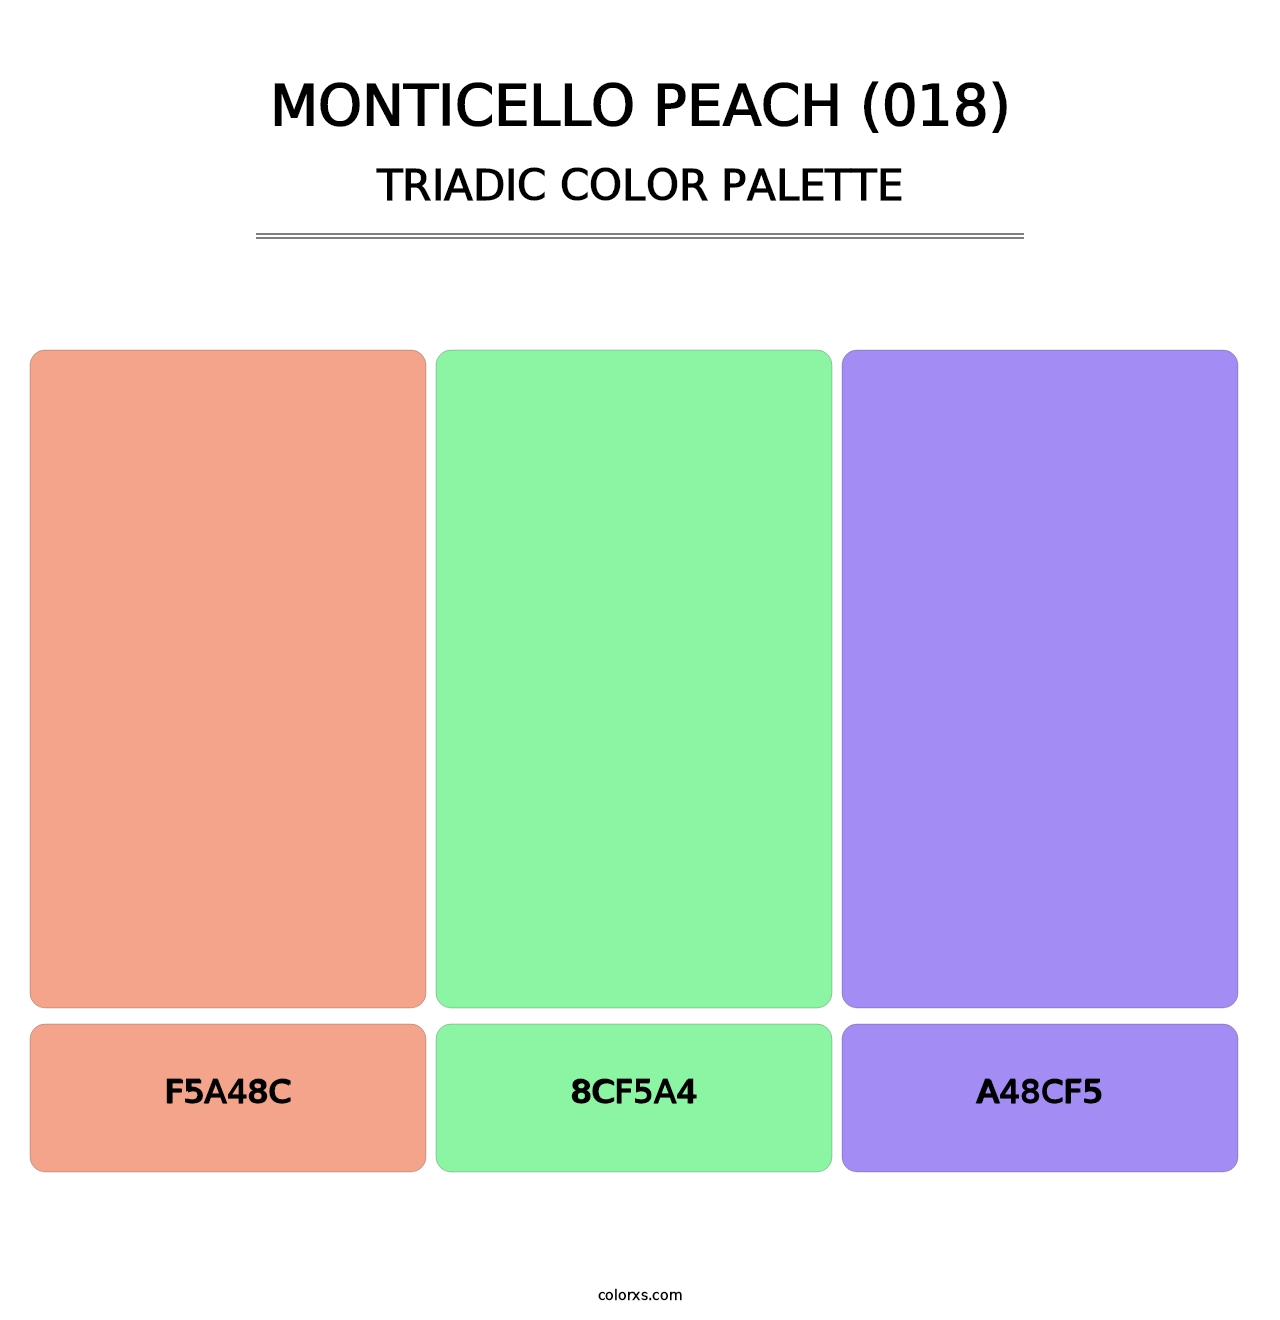 Monticello Peach (018) - Triadic Color Palette